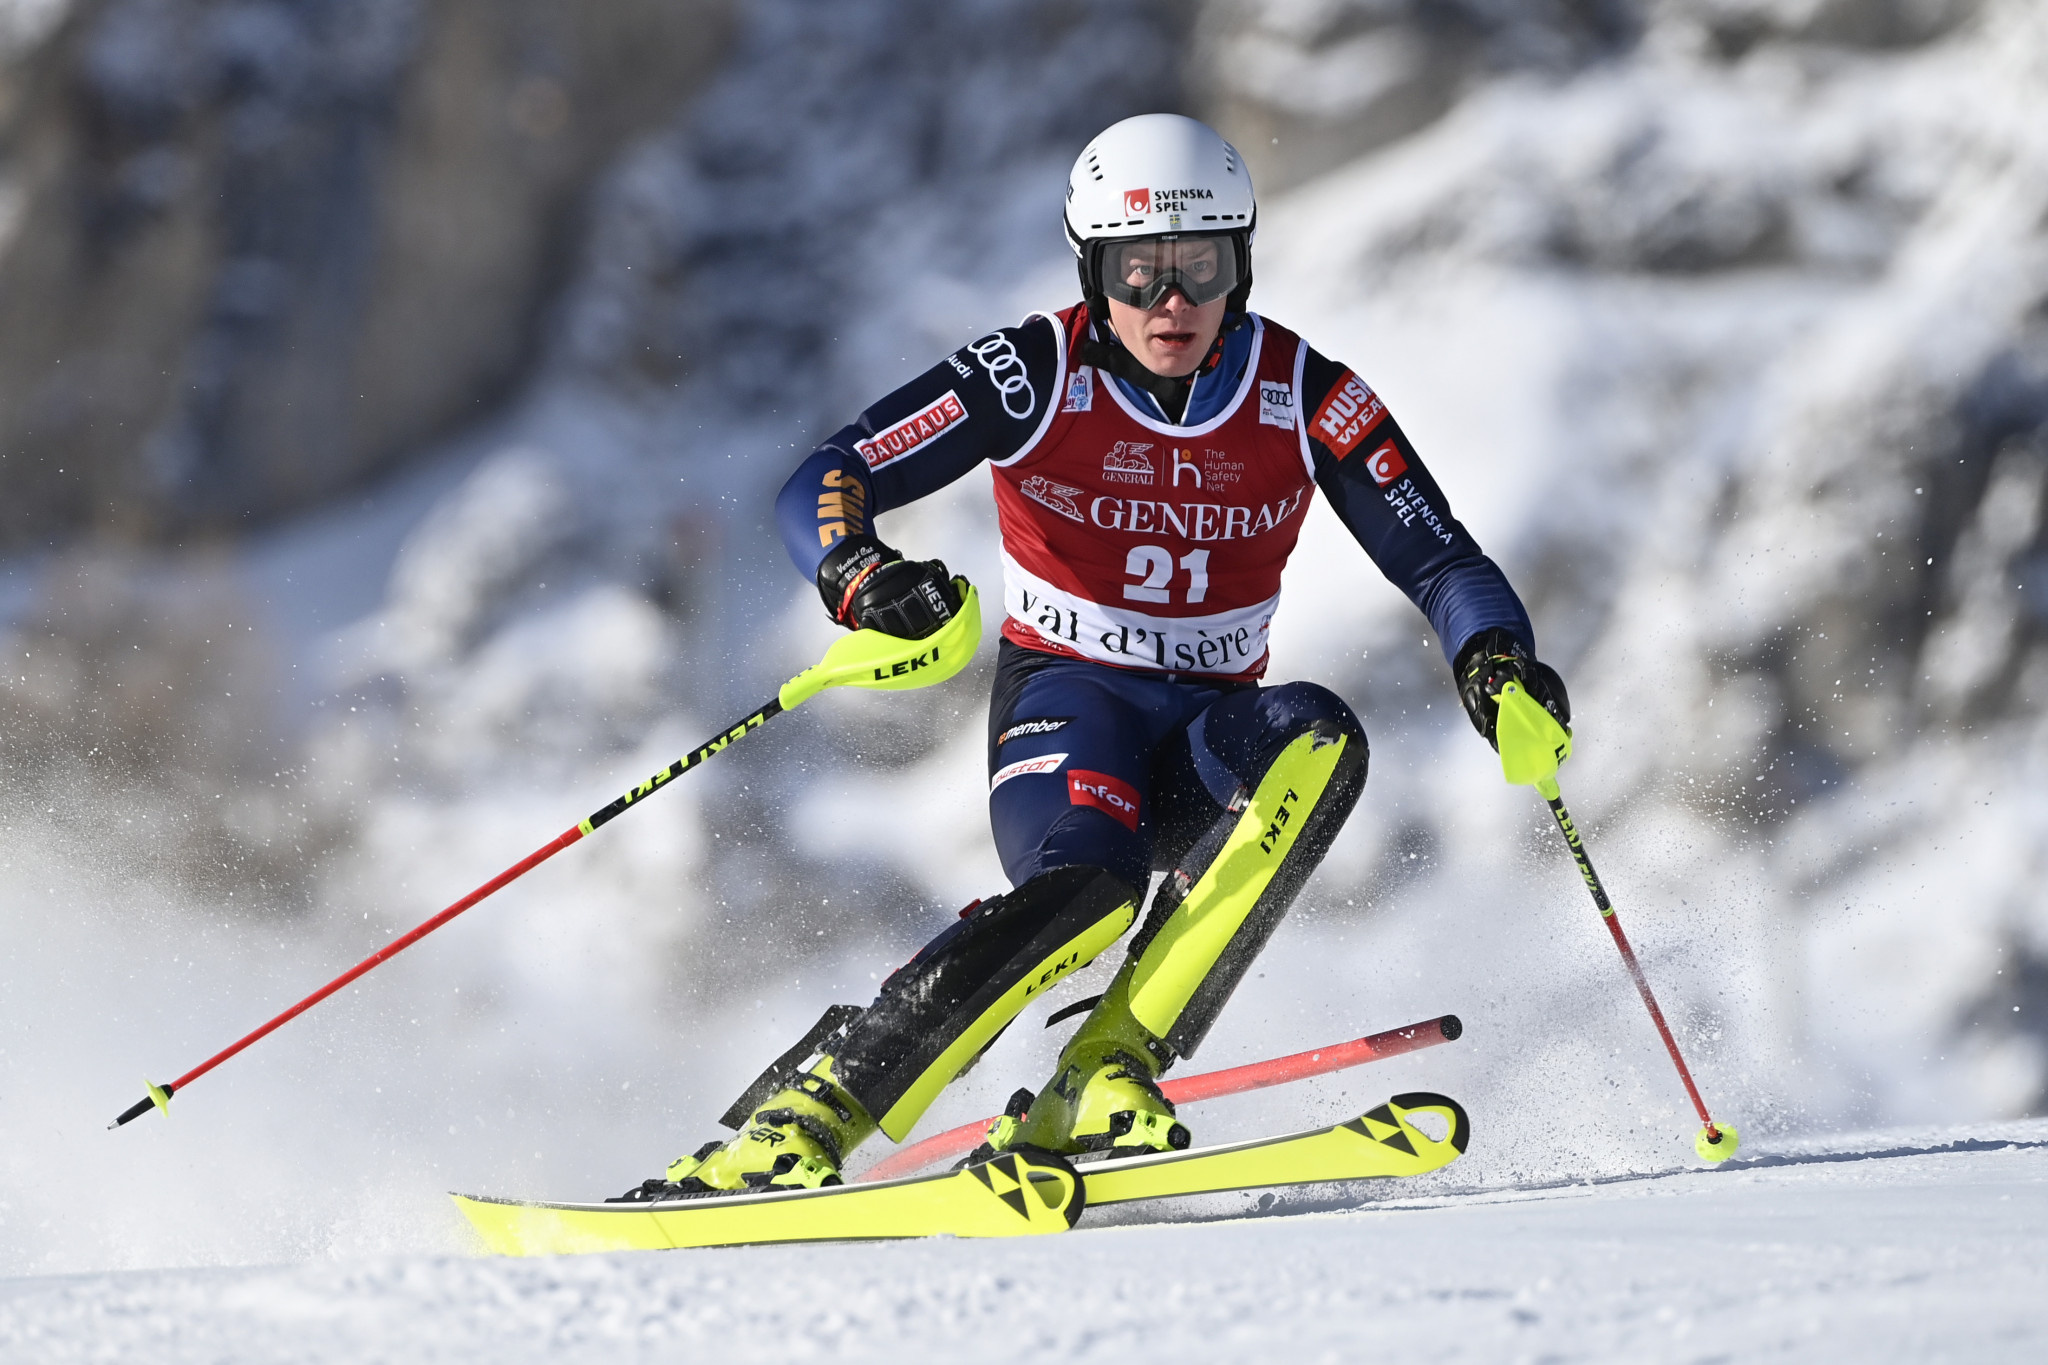 Alpine Skiing: Clement Noel, Men's slalom winner, Alpine Skiing World Cup event, Cyclic winter sports. 2050x1370 HD Wallpaper.